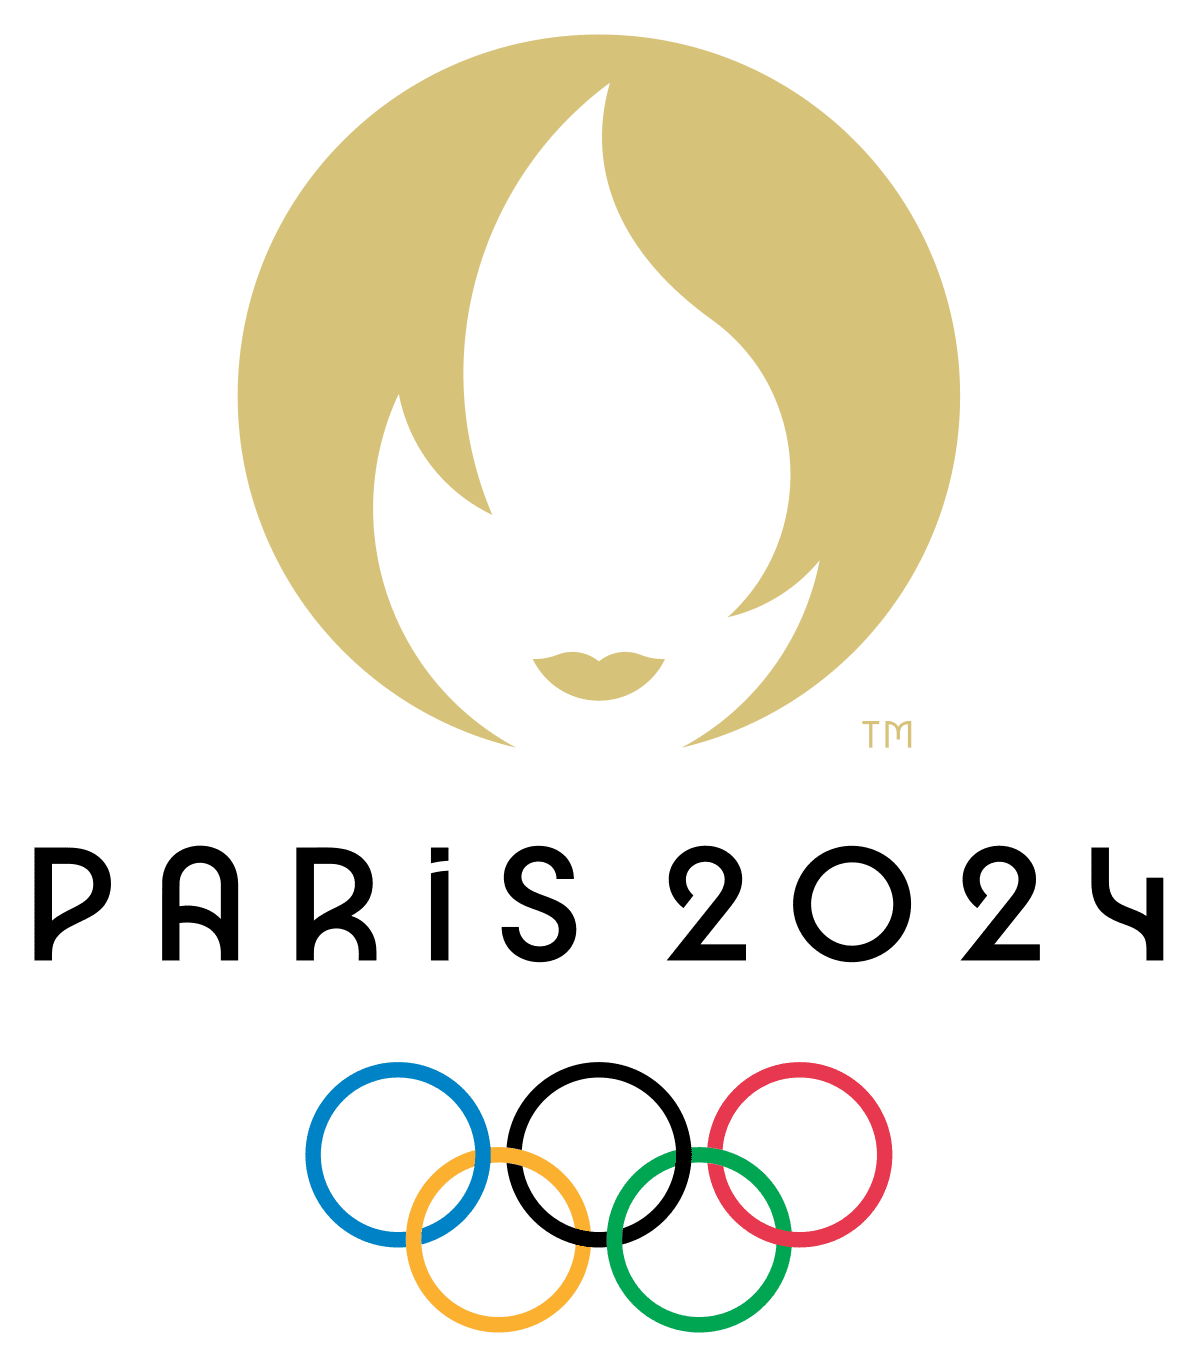 Paris 2024 Olympic Torch Relay To Begin In Marseille NigeriaDNA